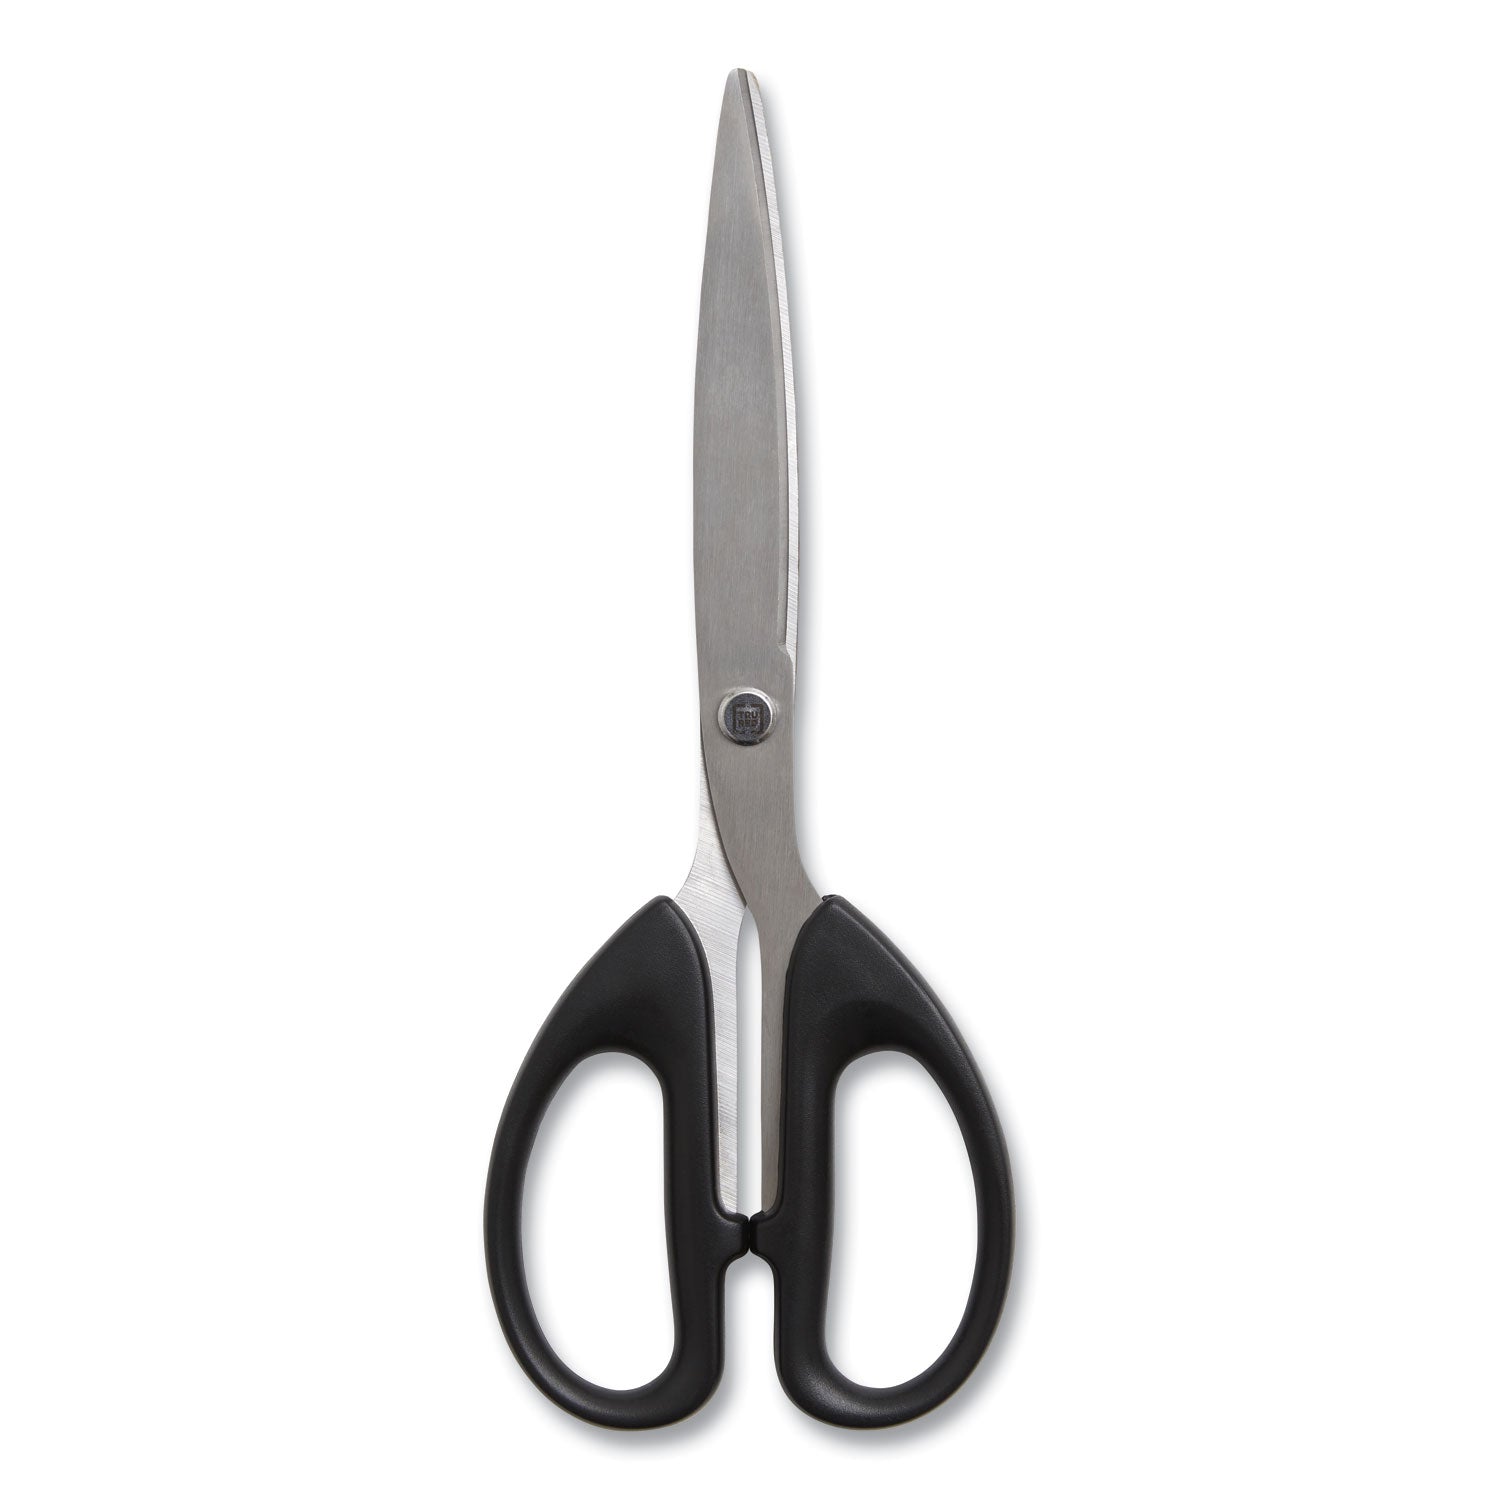 ambidextrous-stainless-steel-scissors-8-long-386-cut-length-black-straight-symmetrical-handle-2-pack_tud24380517 - 2